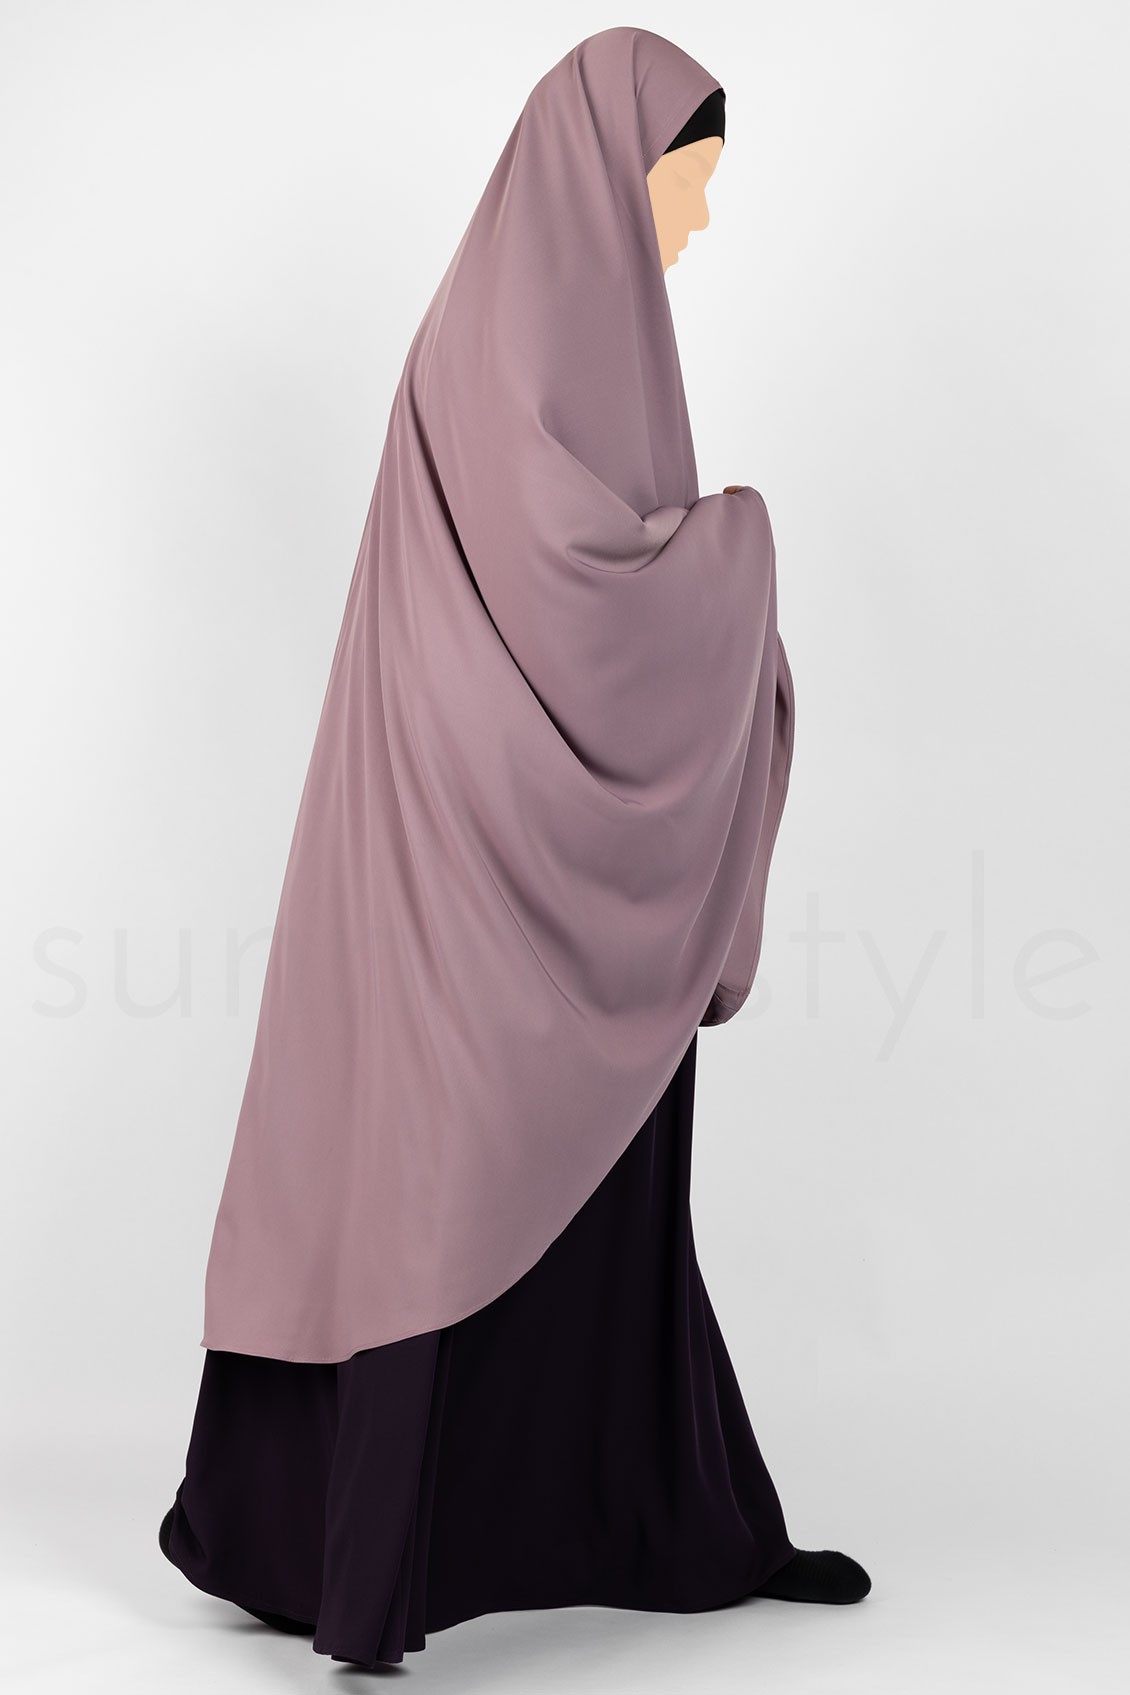 Sunnah Style Essentials Khimar Full Length Elderberry